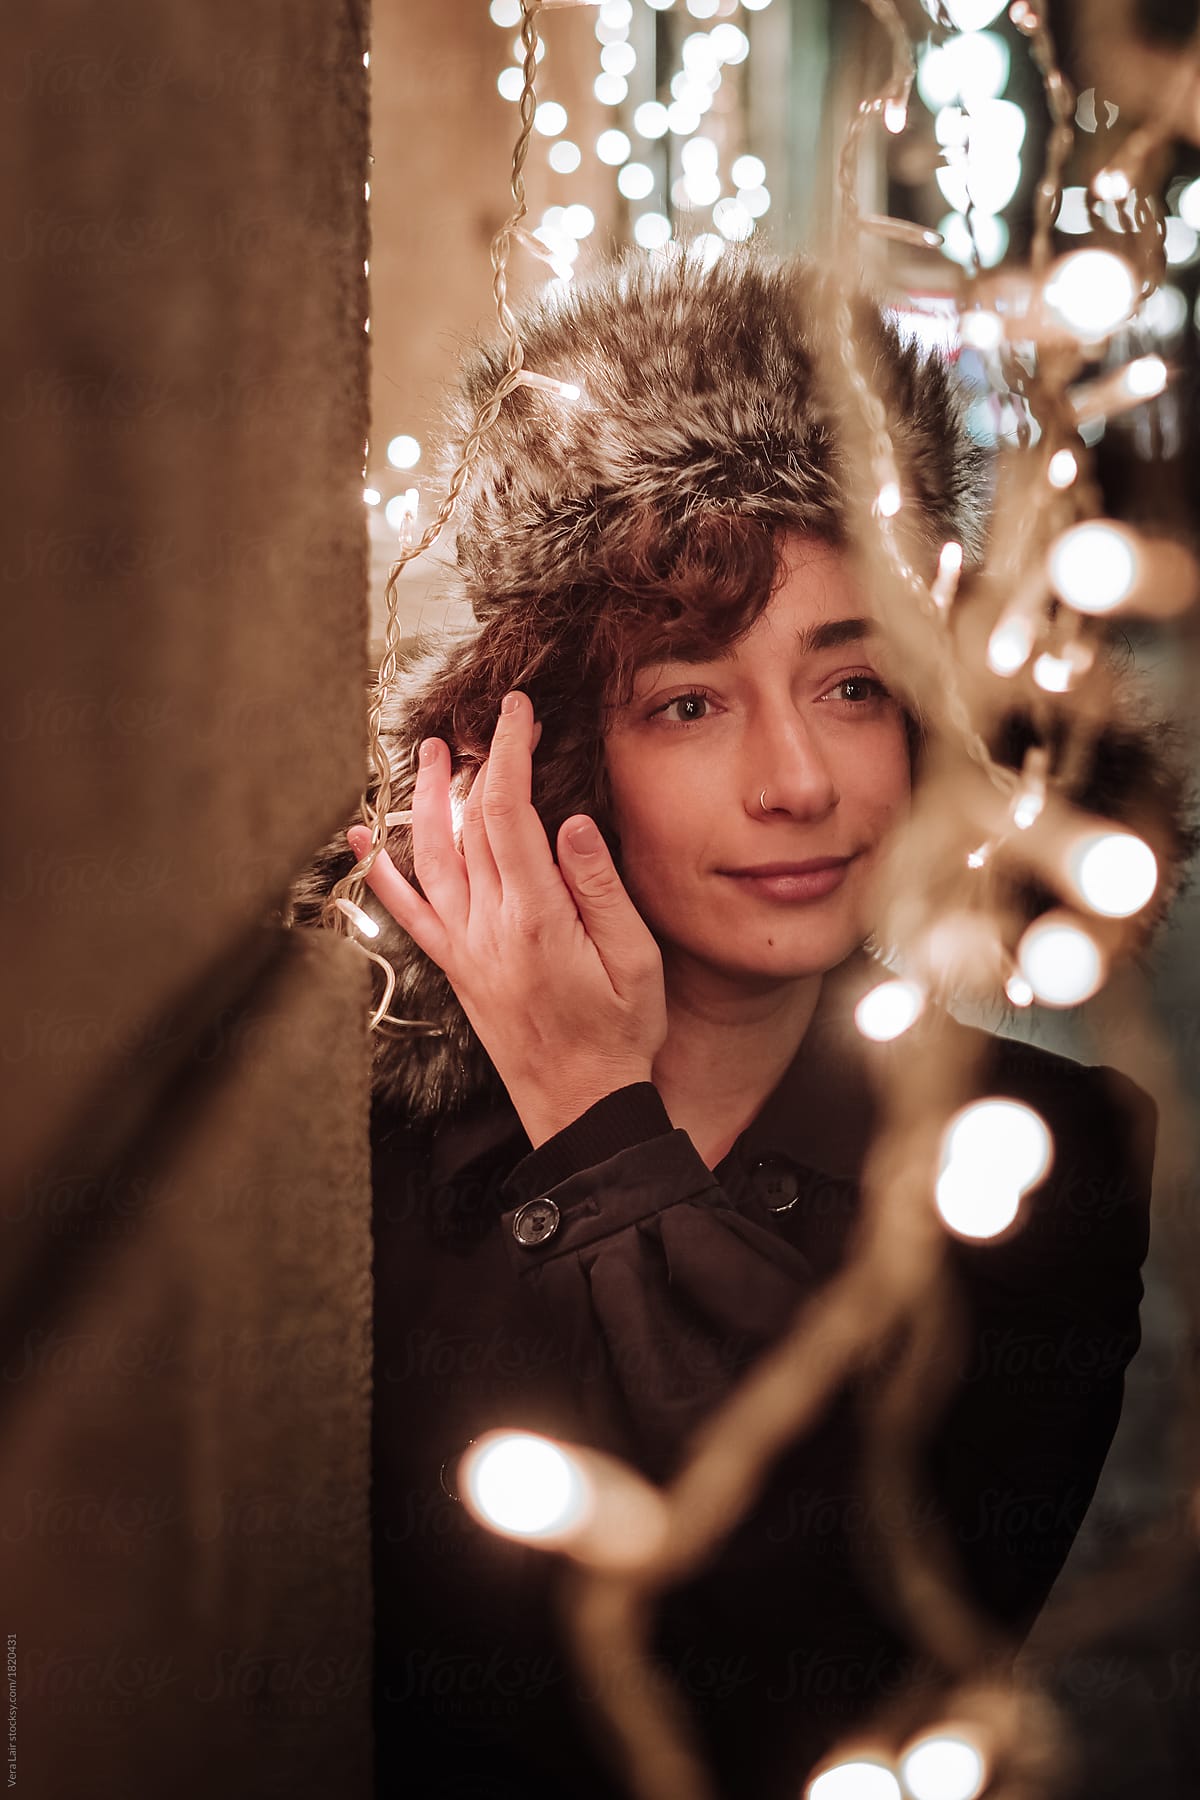 Databasen Interaktion misundelse Portrait Of A Woman With Christmas Light" by Stocksy Contributor "Vera  Lair" - Stocksy